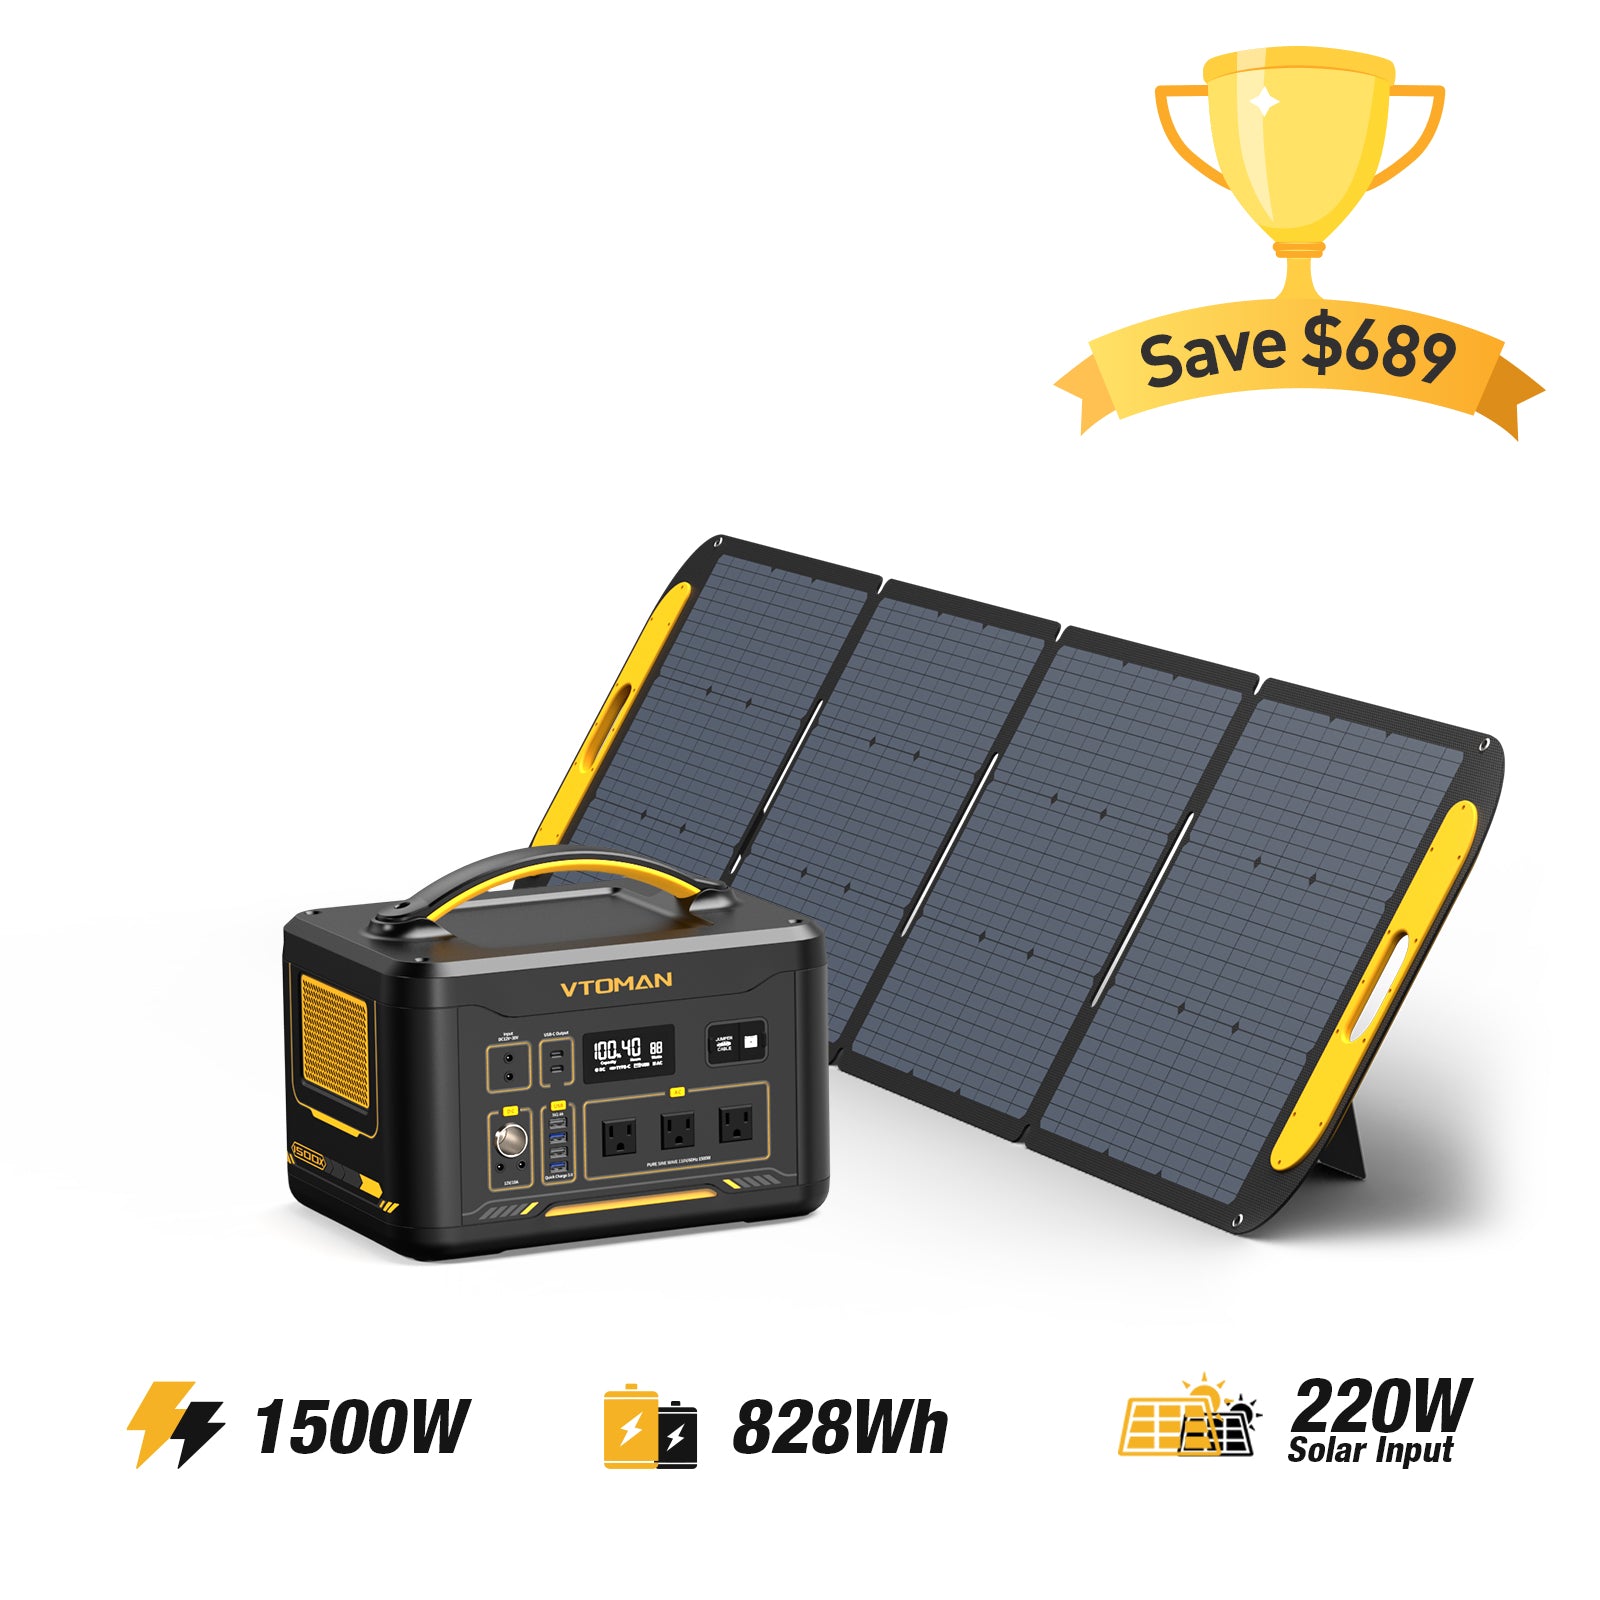 Jump 1500W/828Wh 220W Solar Generator